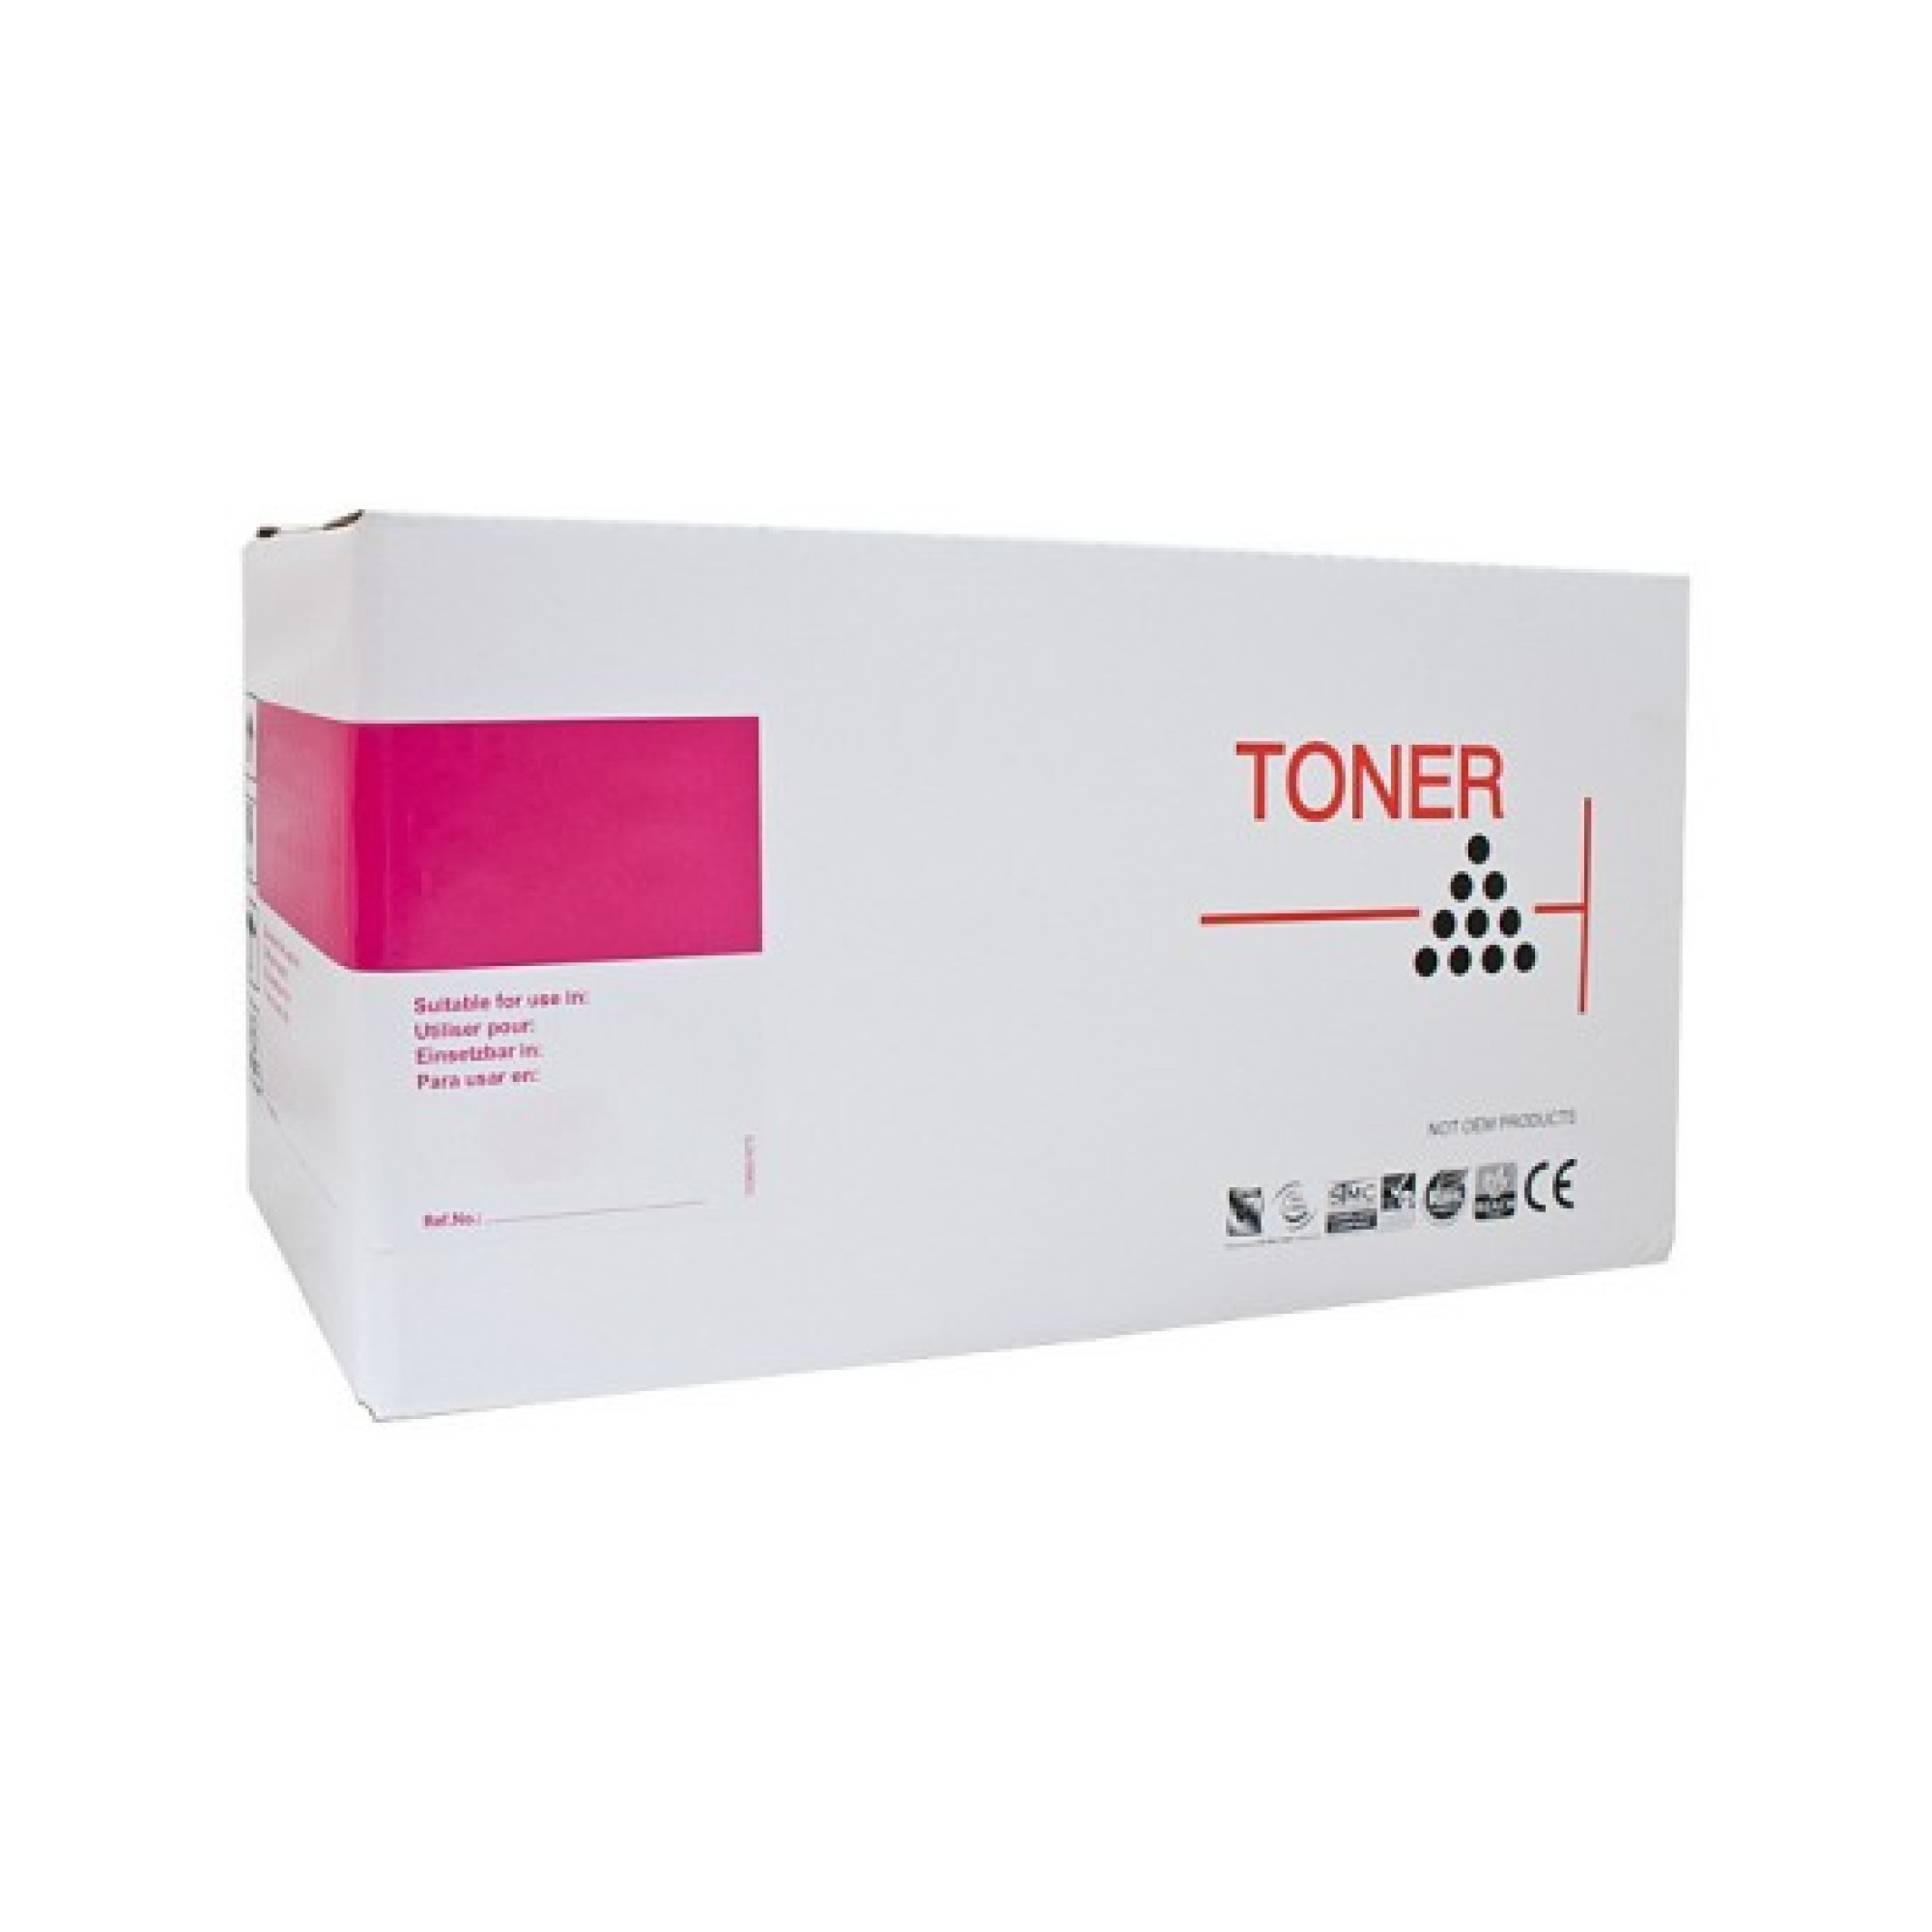 Brother TN341 Compatible Toner Cartridge Magenta